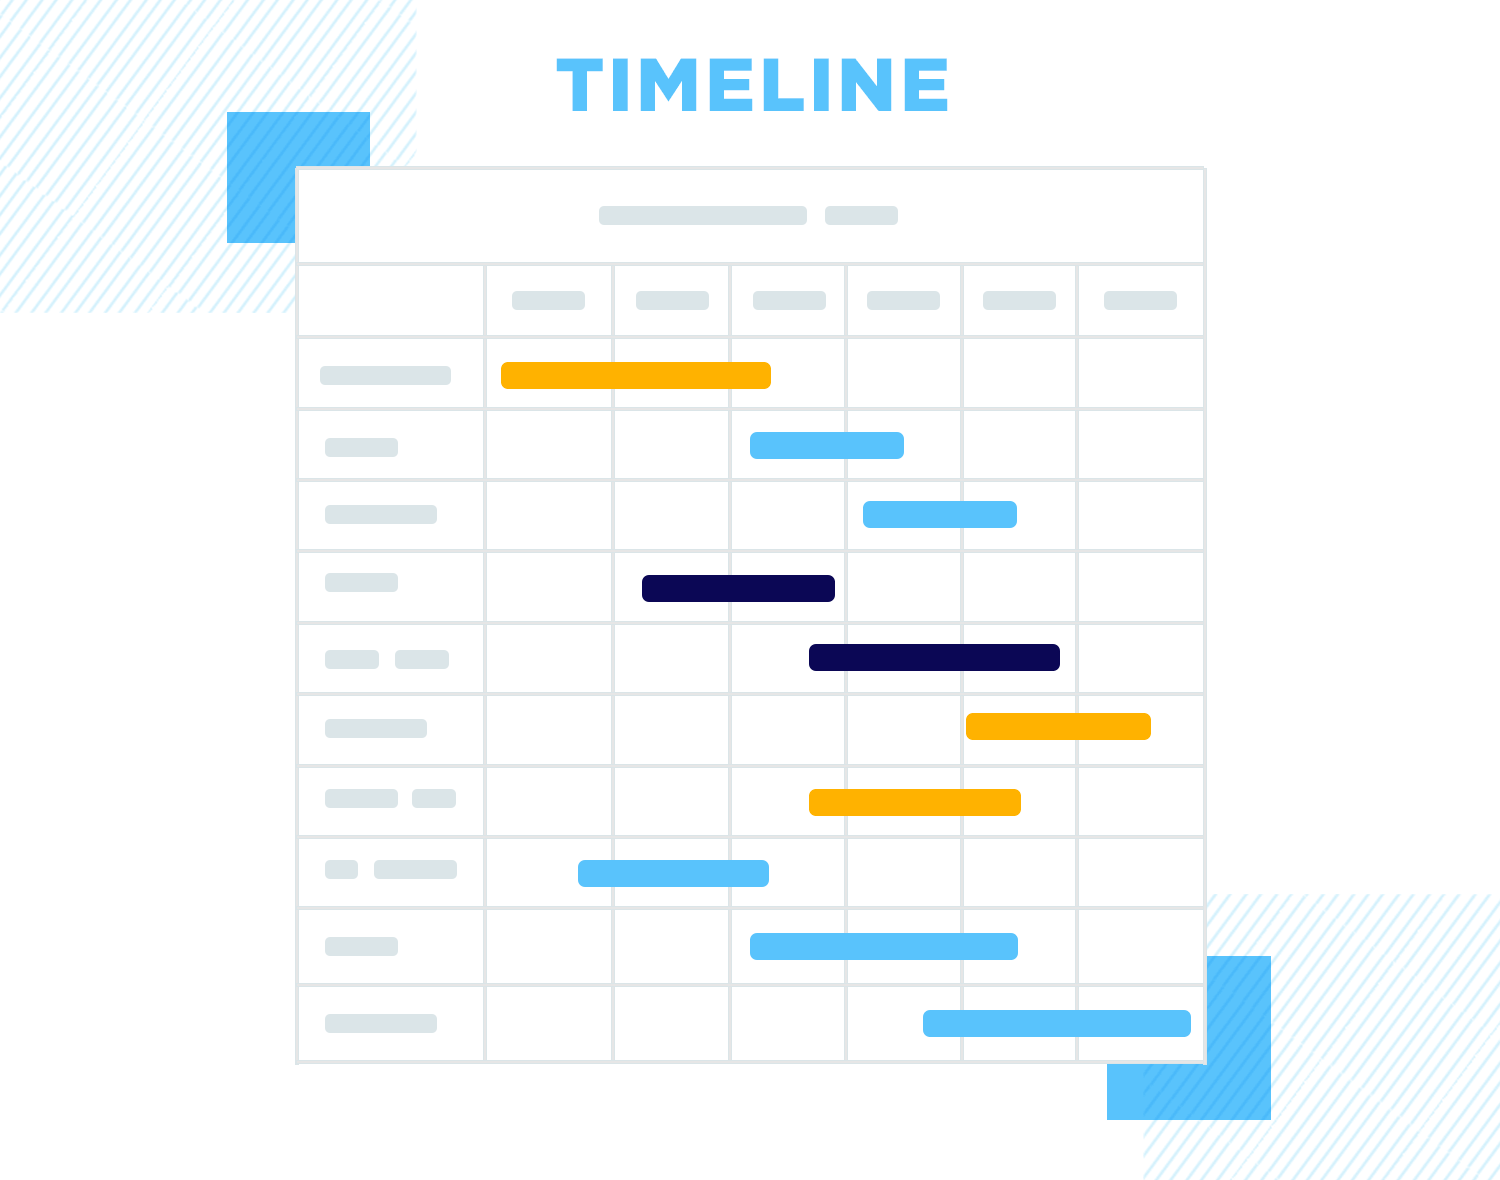 Functional specification documents - timeline roadmap using Gantt chart